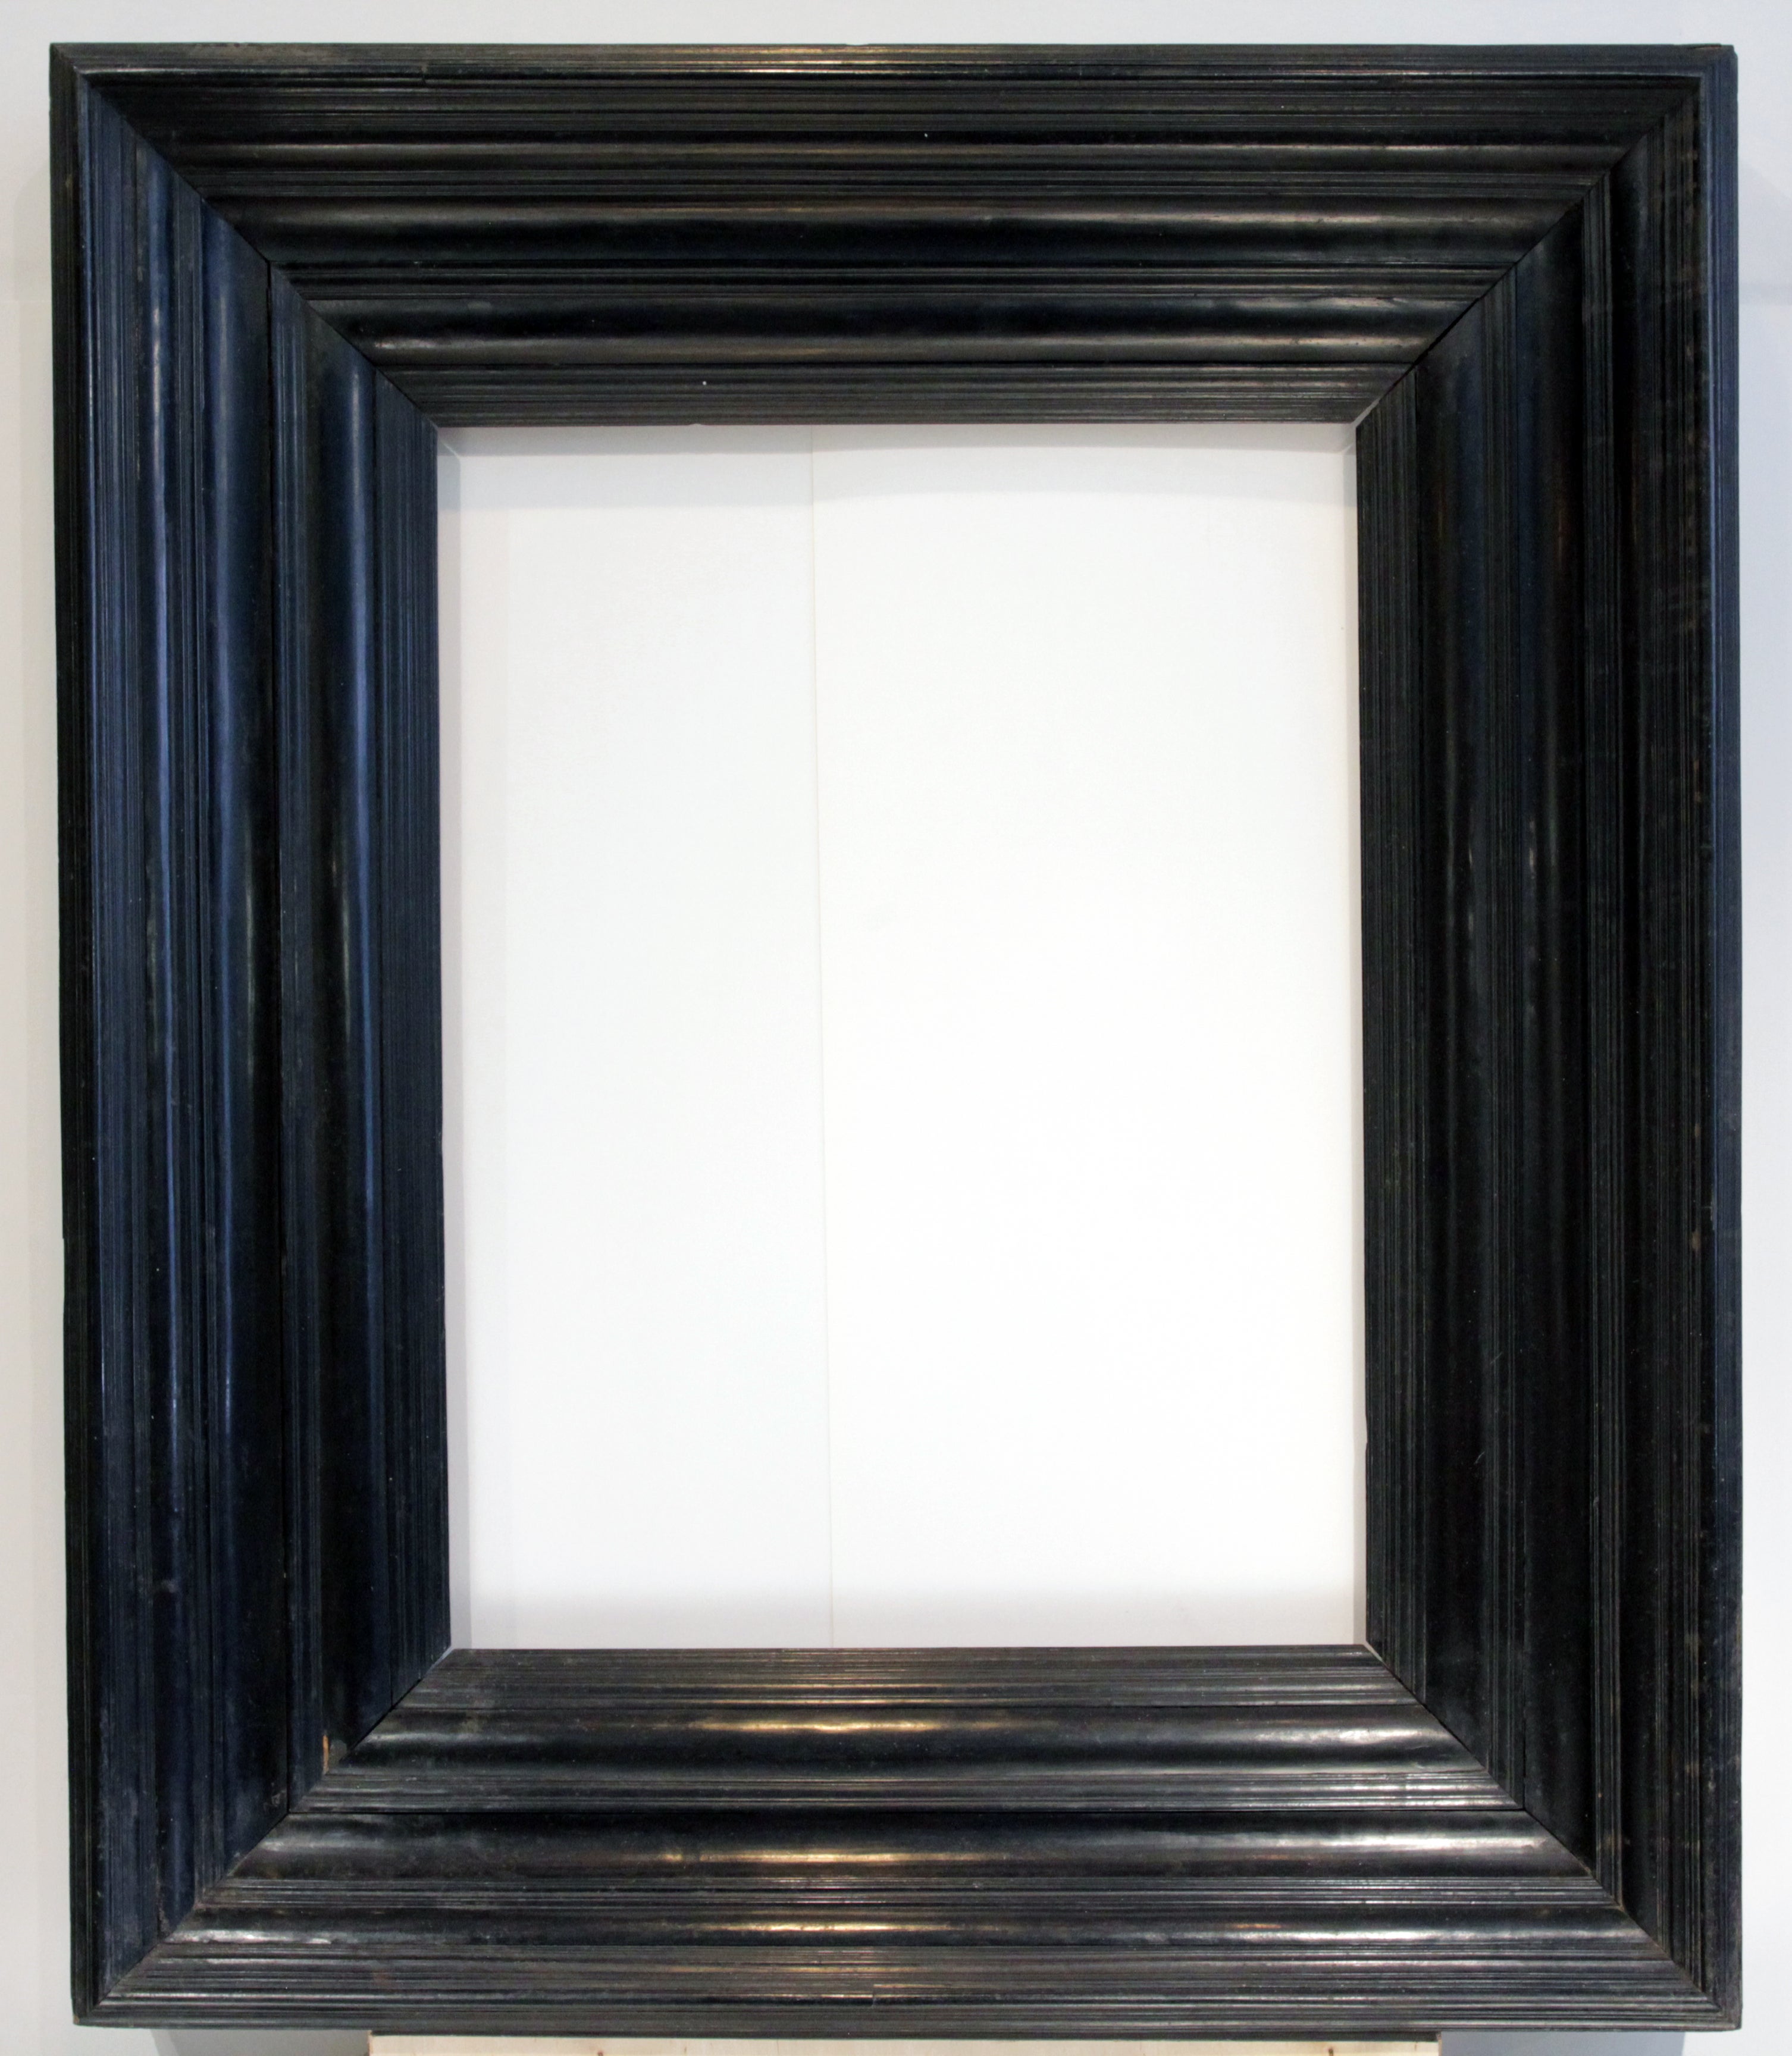 17th-18th Century Italian (Dutch Style) Macassar Ebony Dimensional Wood Frame. For Sale